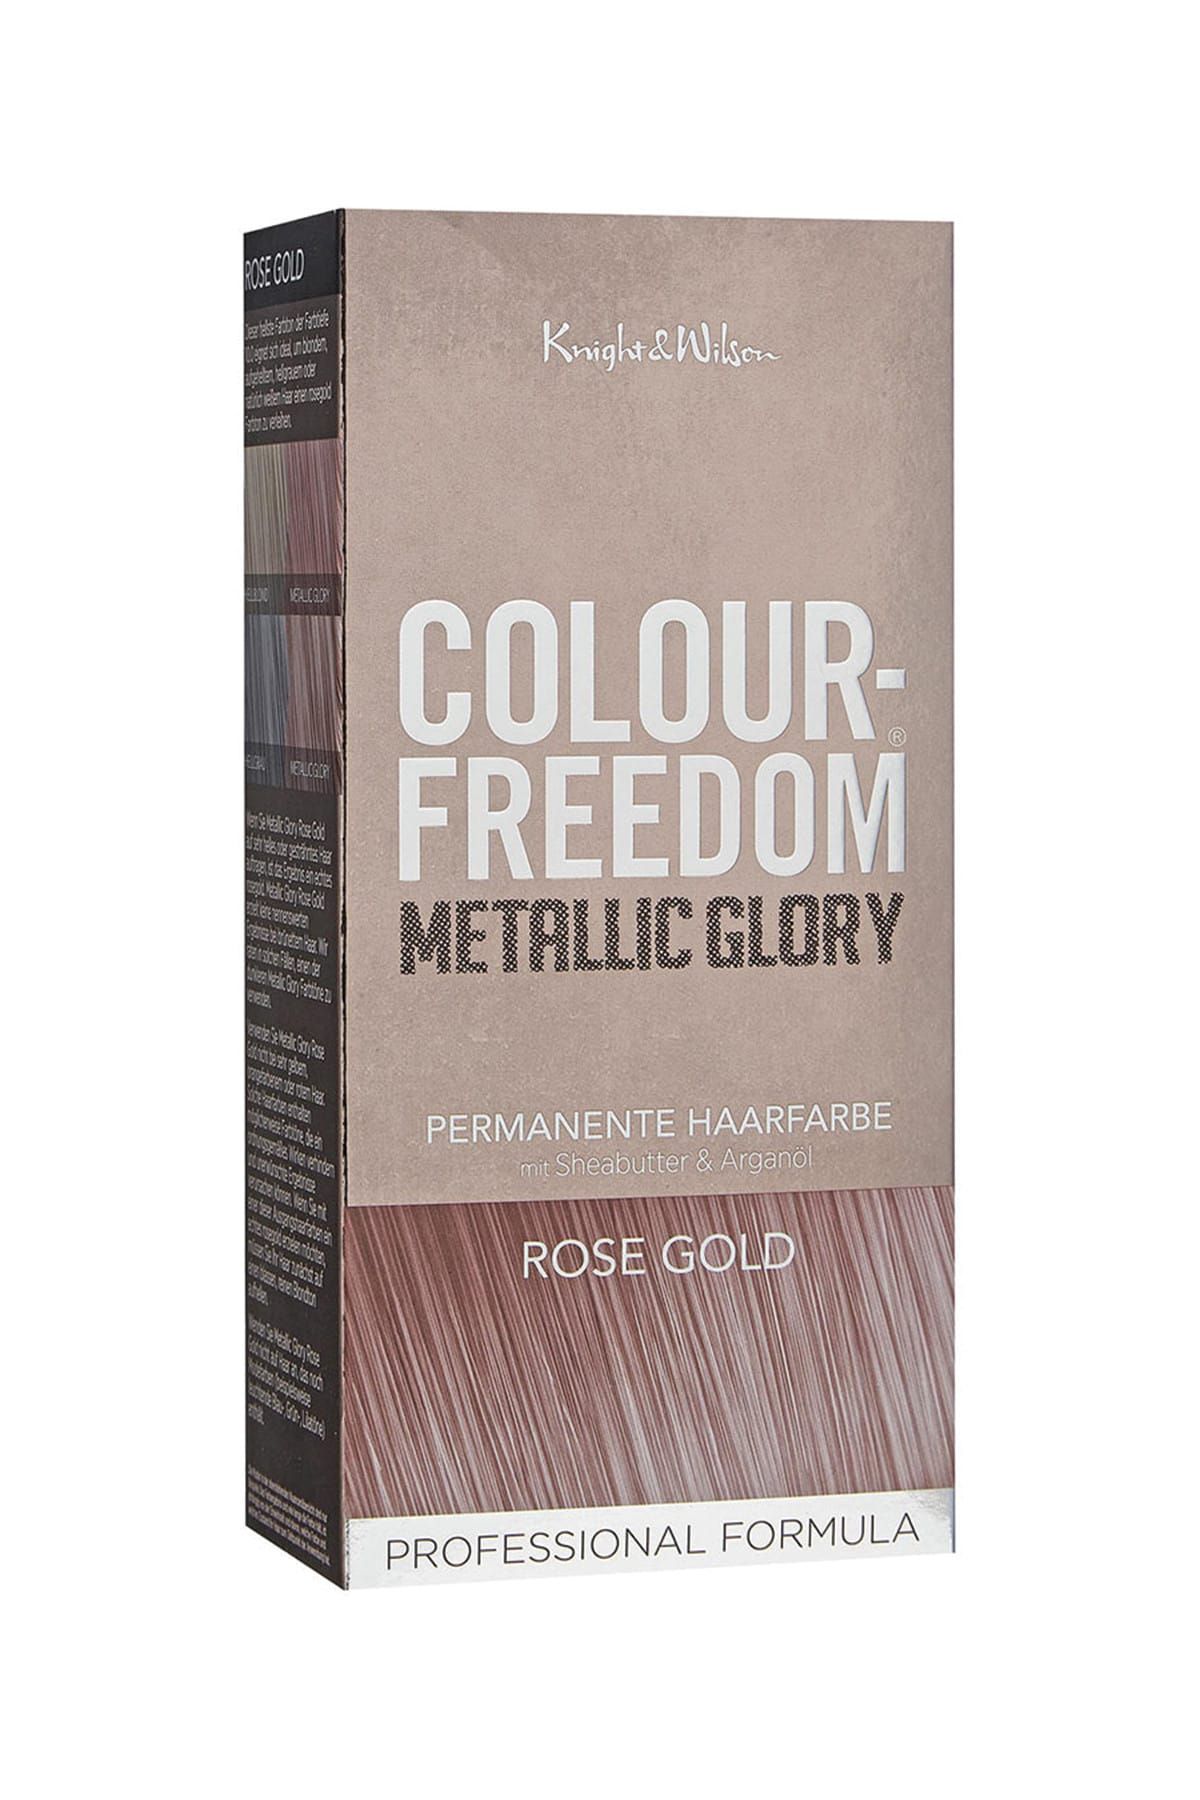 Colour Freedom Metallic Glory Rose Gold Kalici Sac Boyasi 5055786221151 Fiyati Yorumlari Trendyol